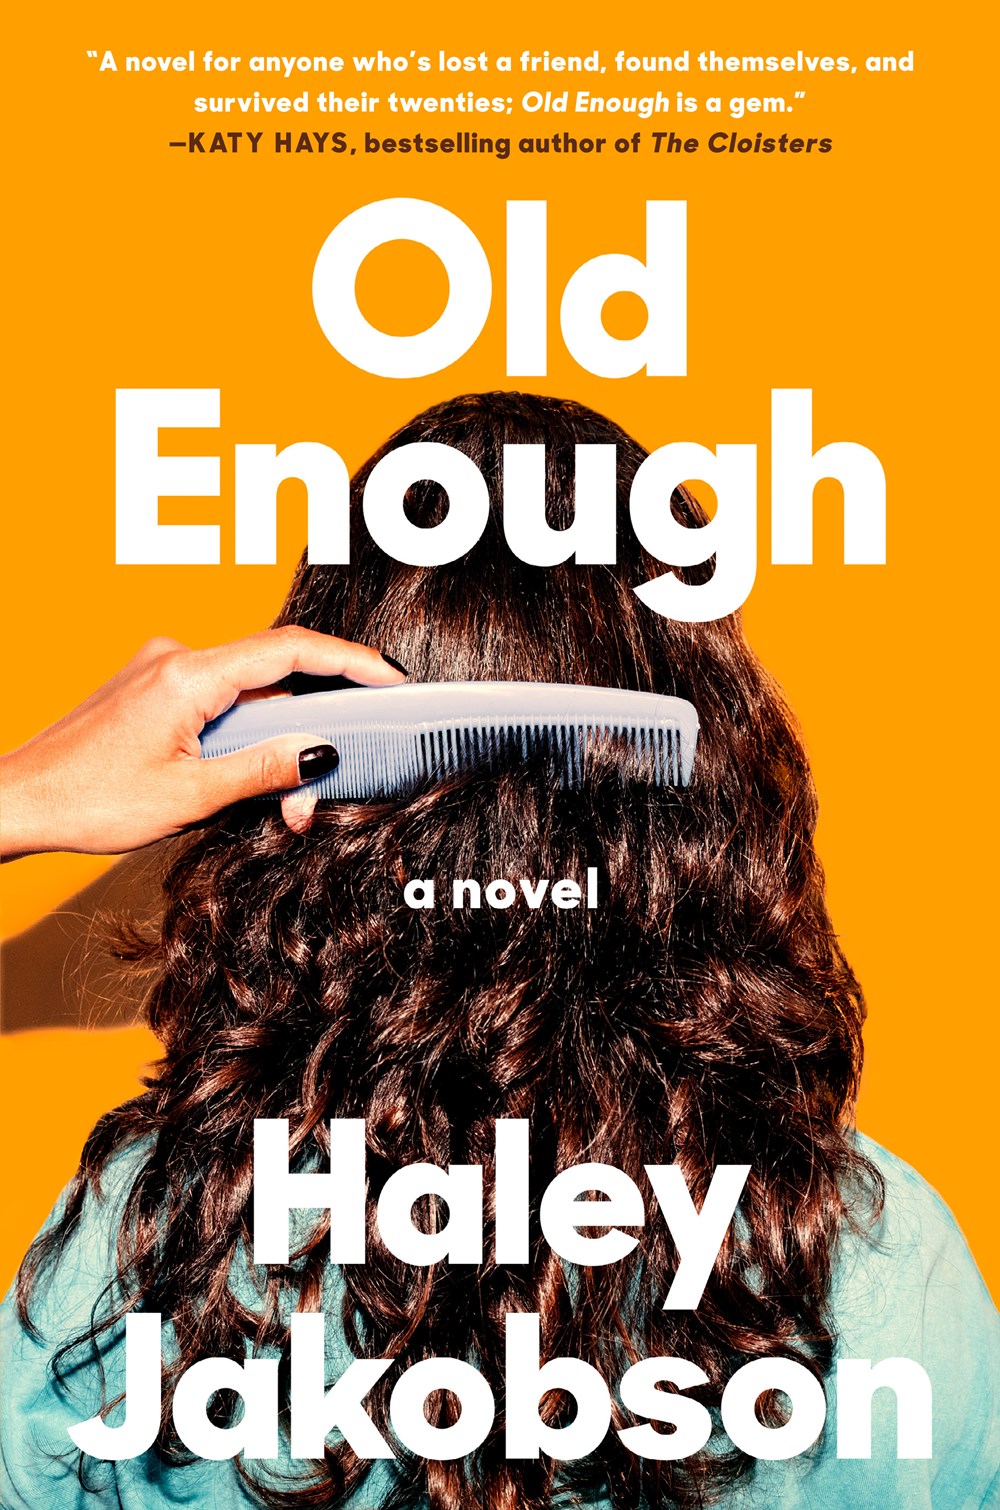 Old Enough: A Novel